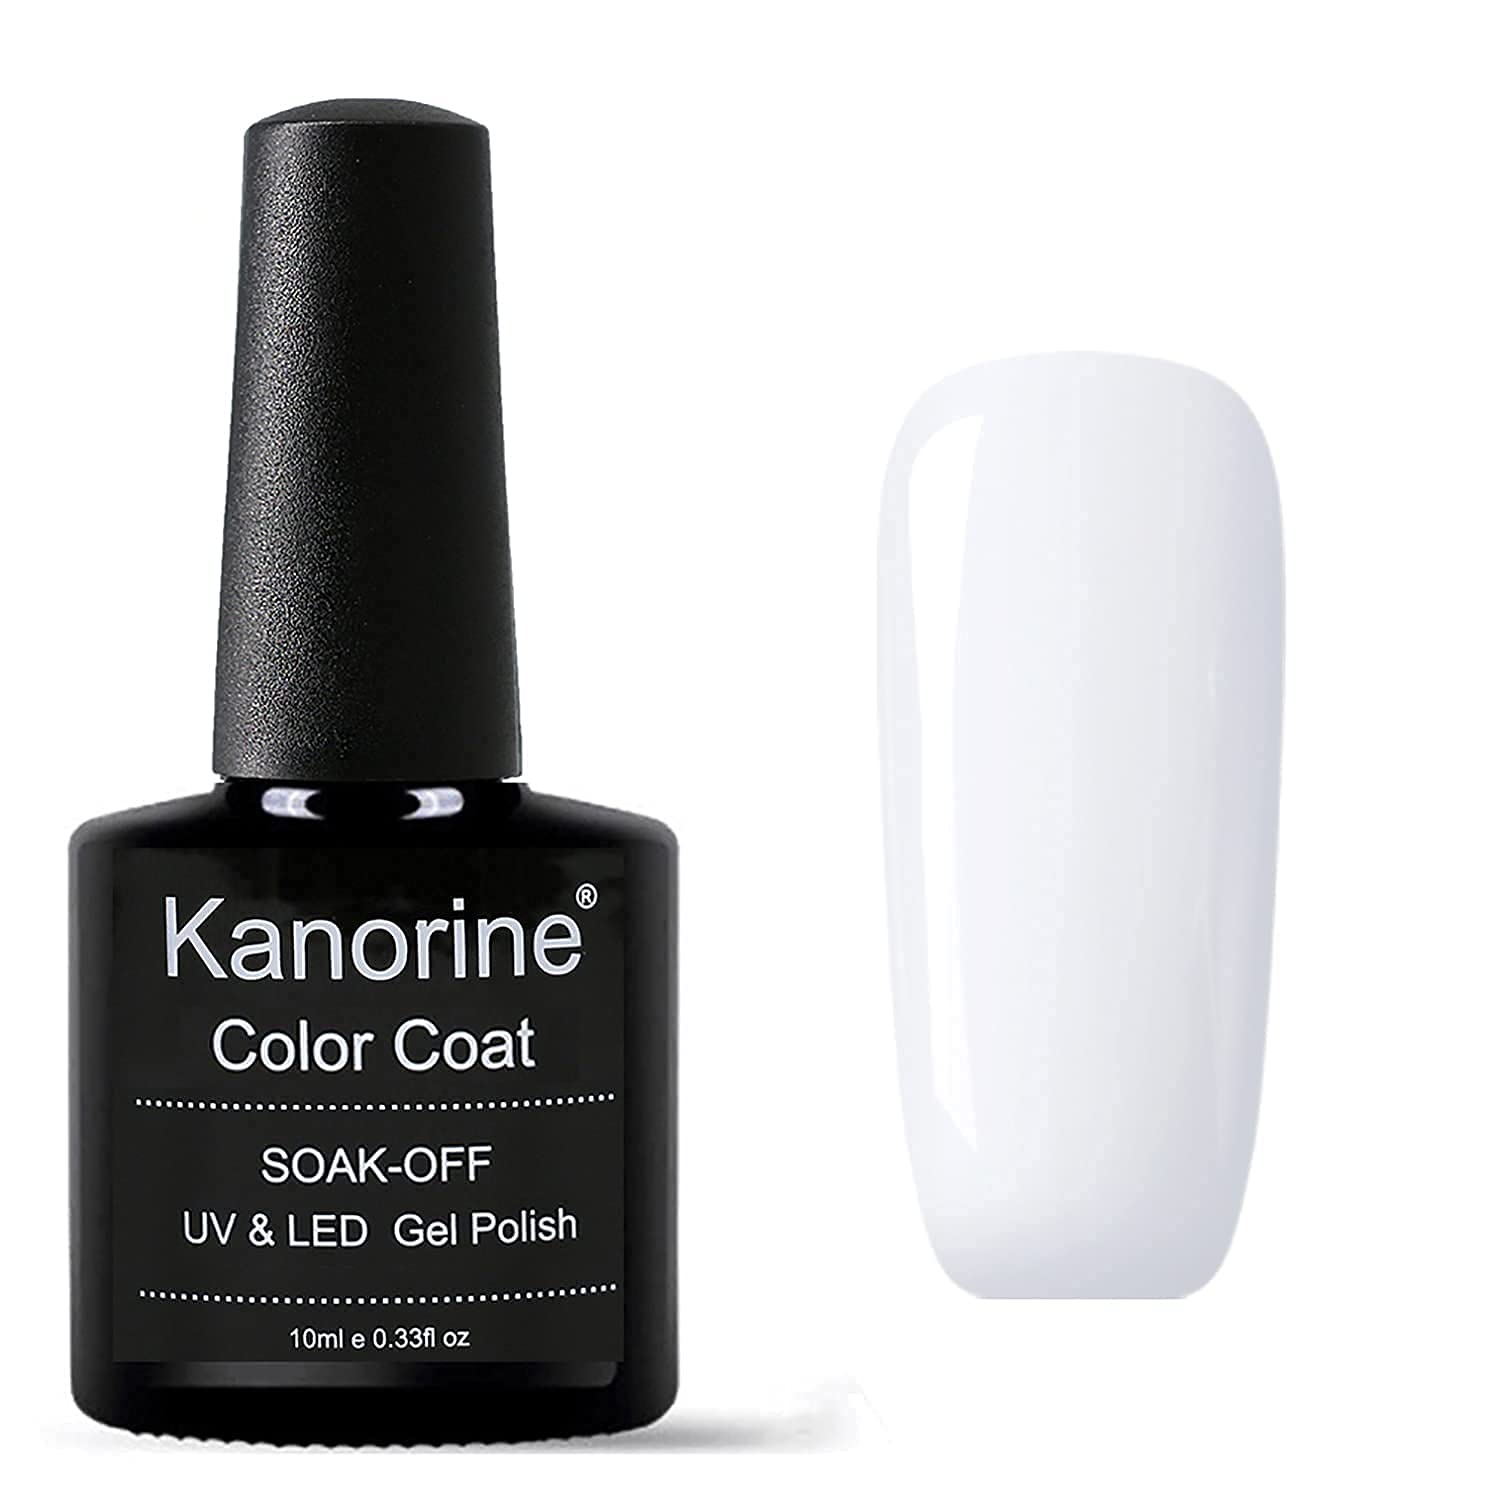 KANORINE Gel Polish Soak-Off UV/LED White Colour Gel Nail Polish white Color Coat Gel Nail Varnish Nail Art TYPE 10ml